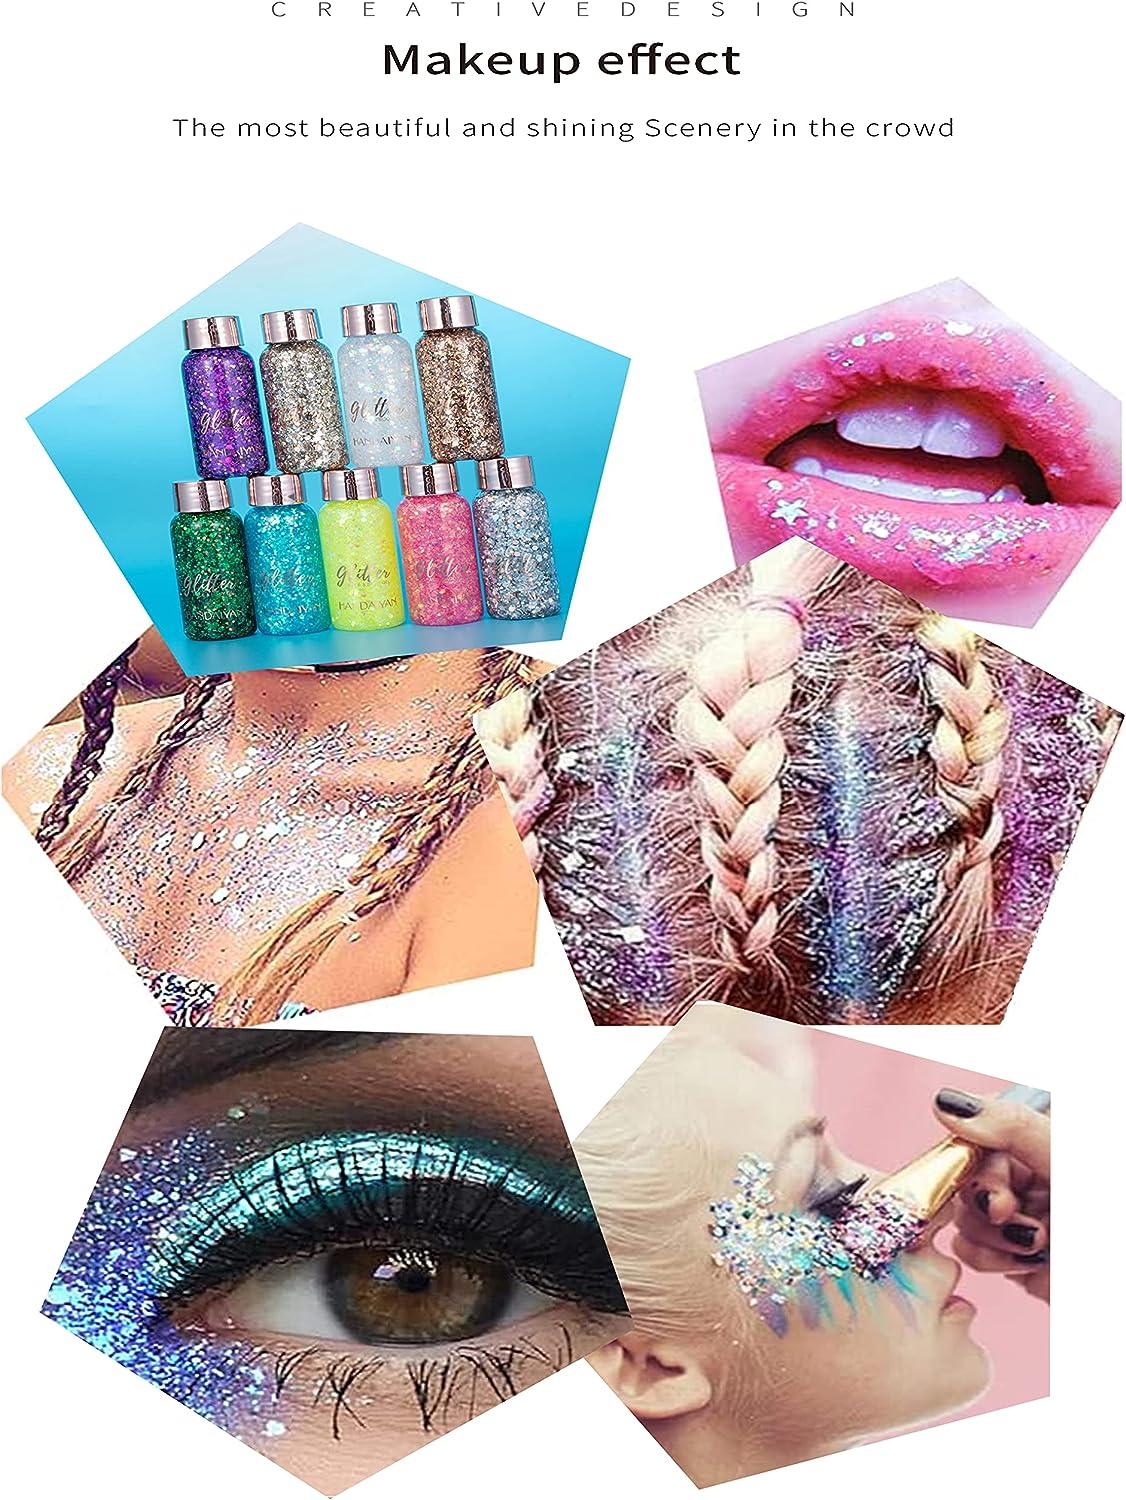 9 Colors Body Glitter Gel For Women & Girls, Glitter Eyeshadow, Easy To  Apply & Remove